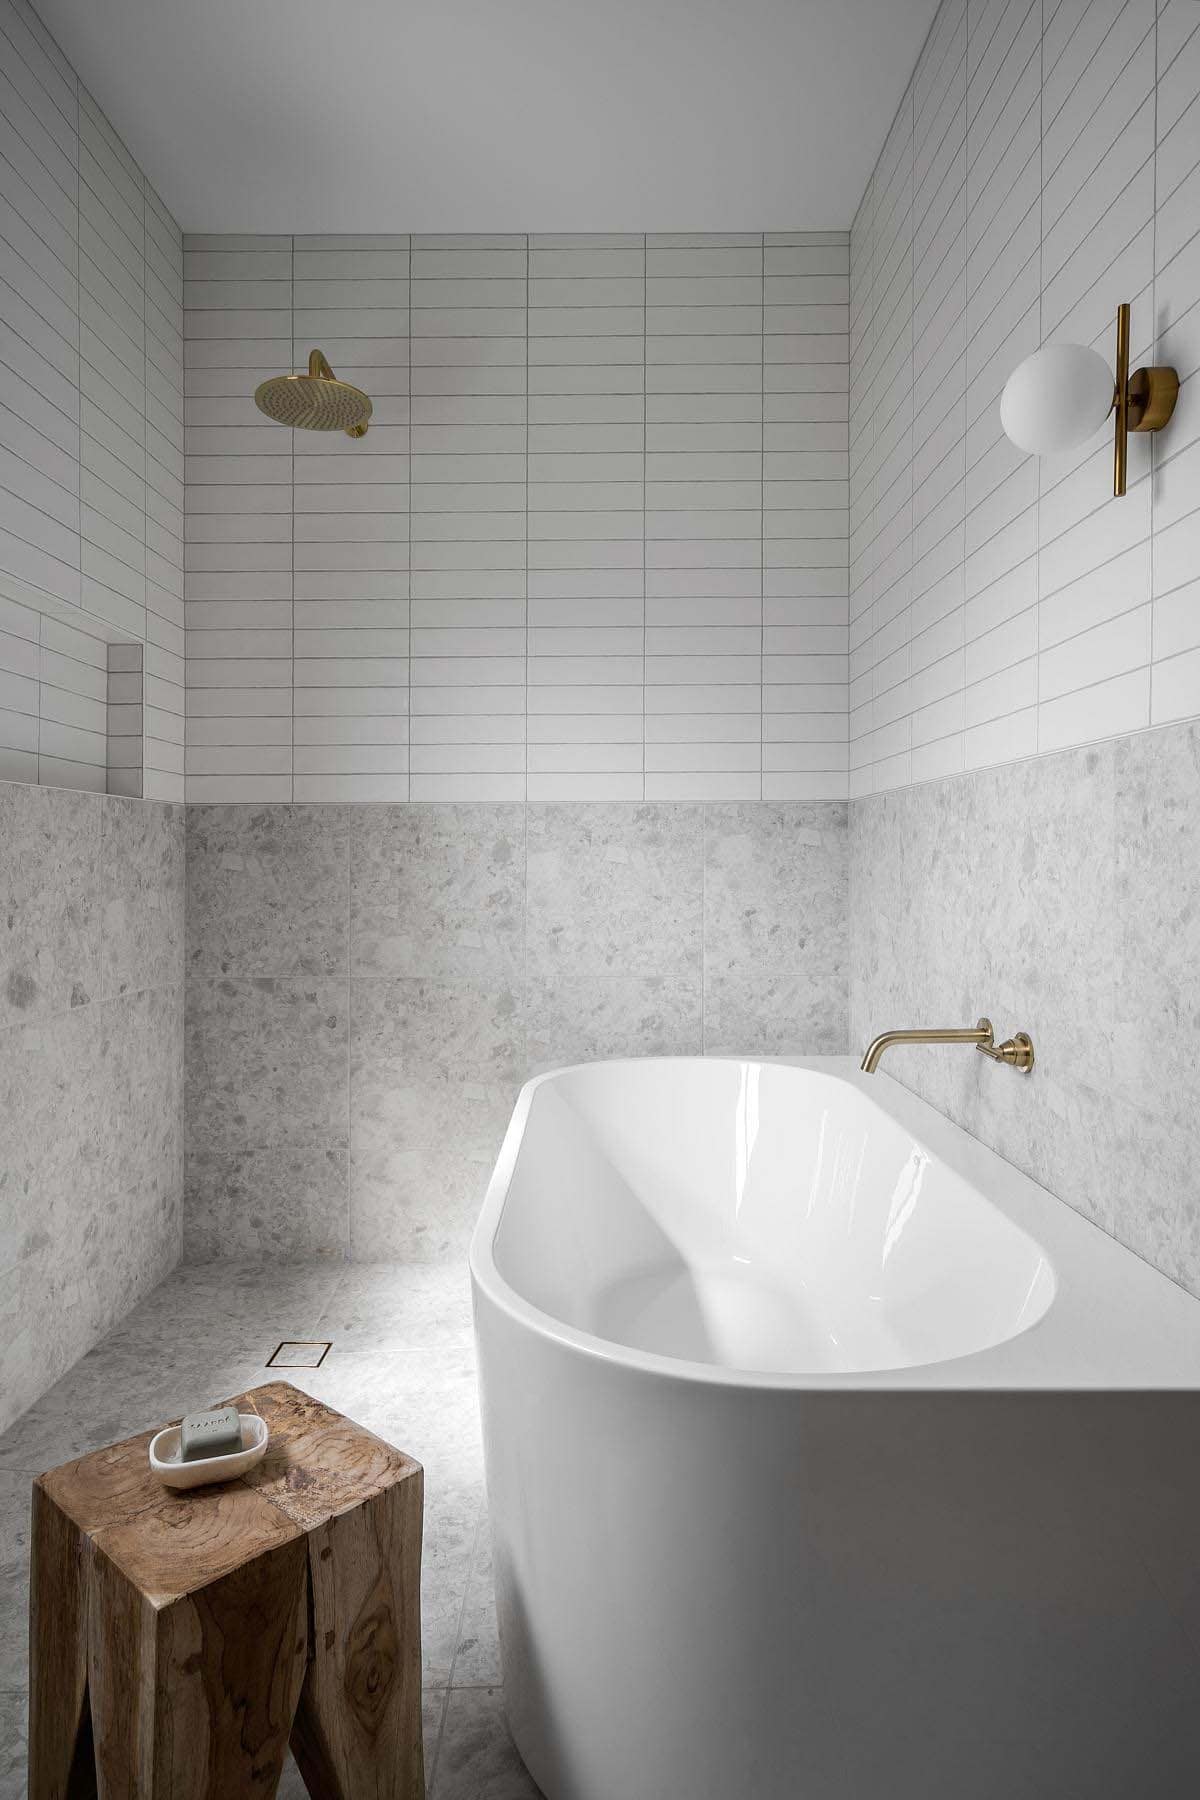 Scandinavian style bathroom shower and tub